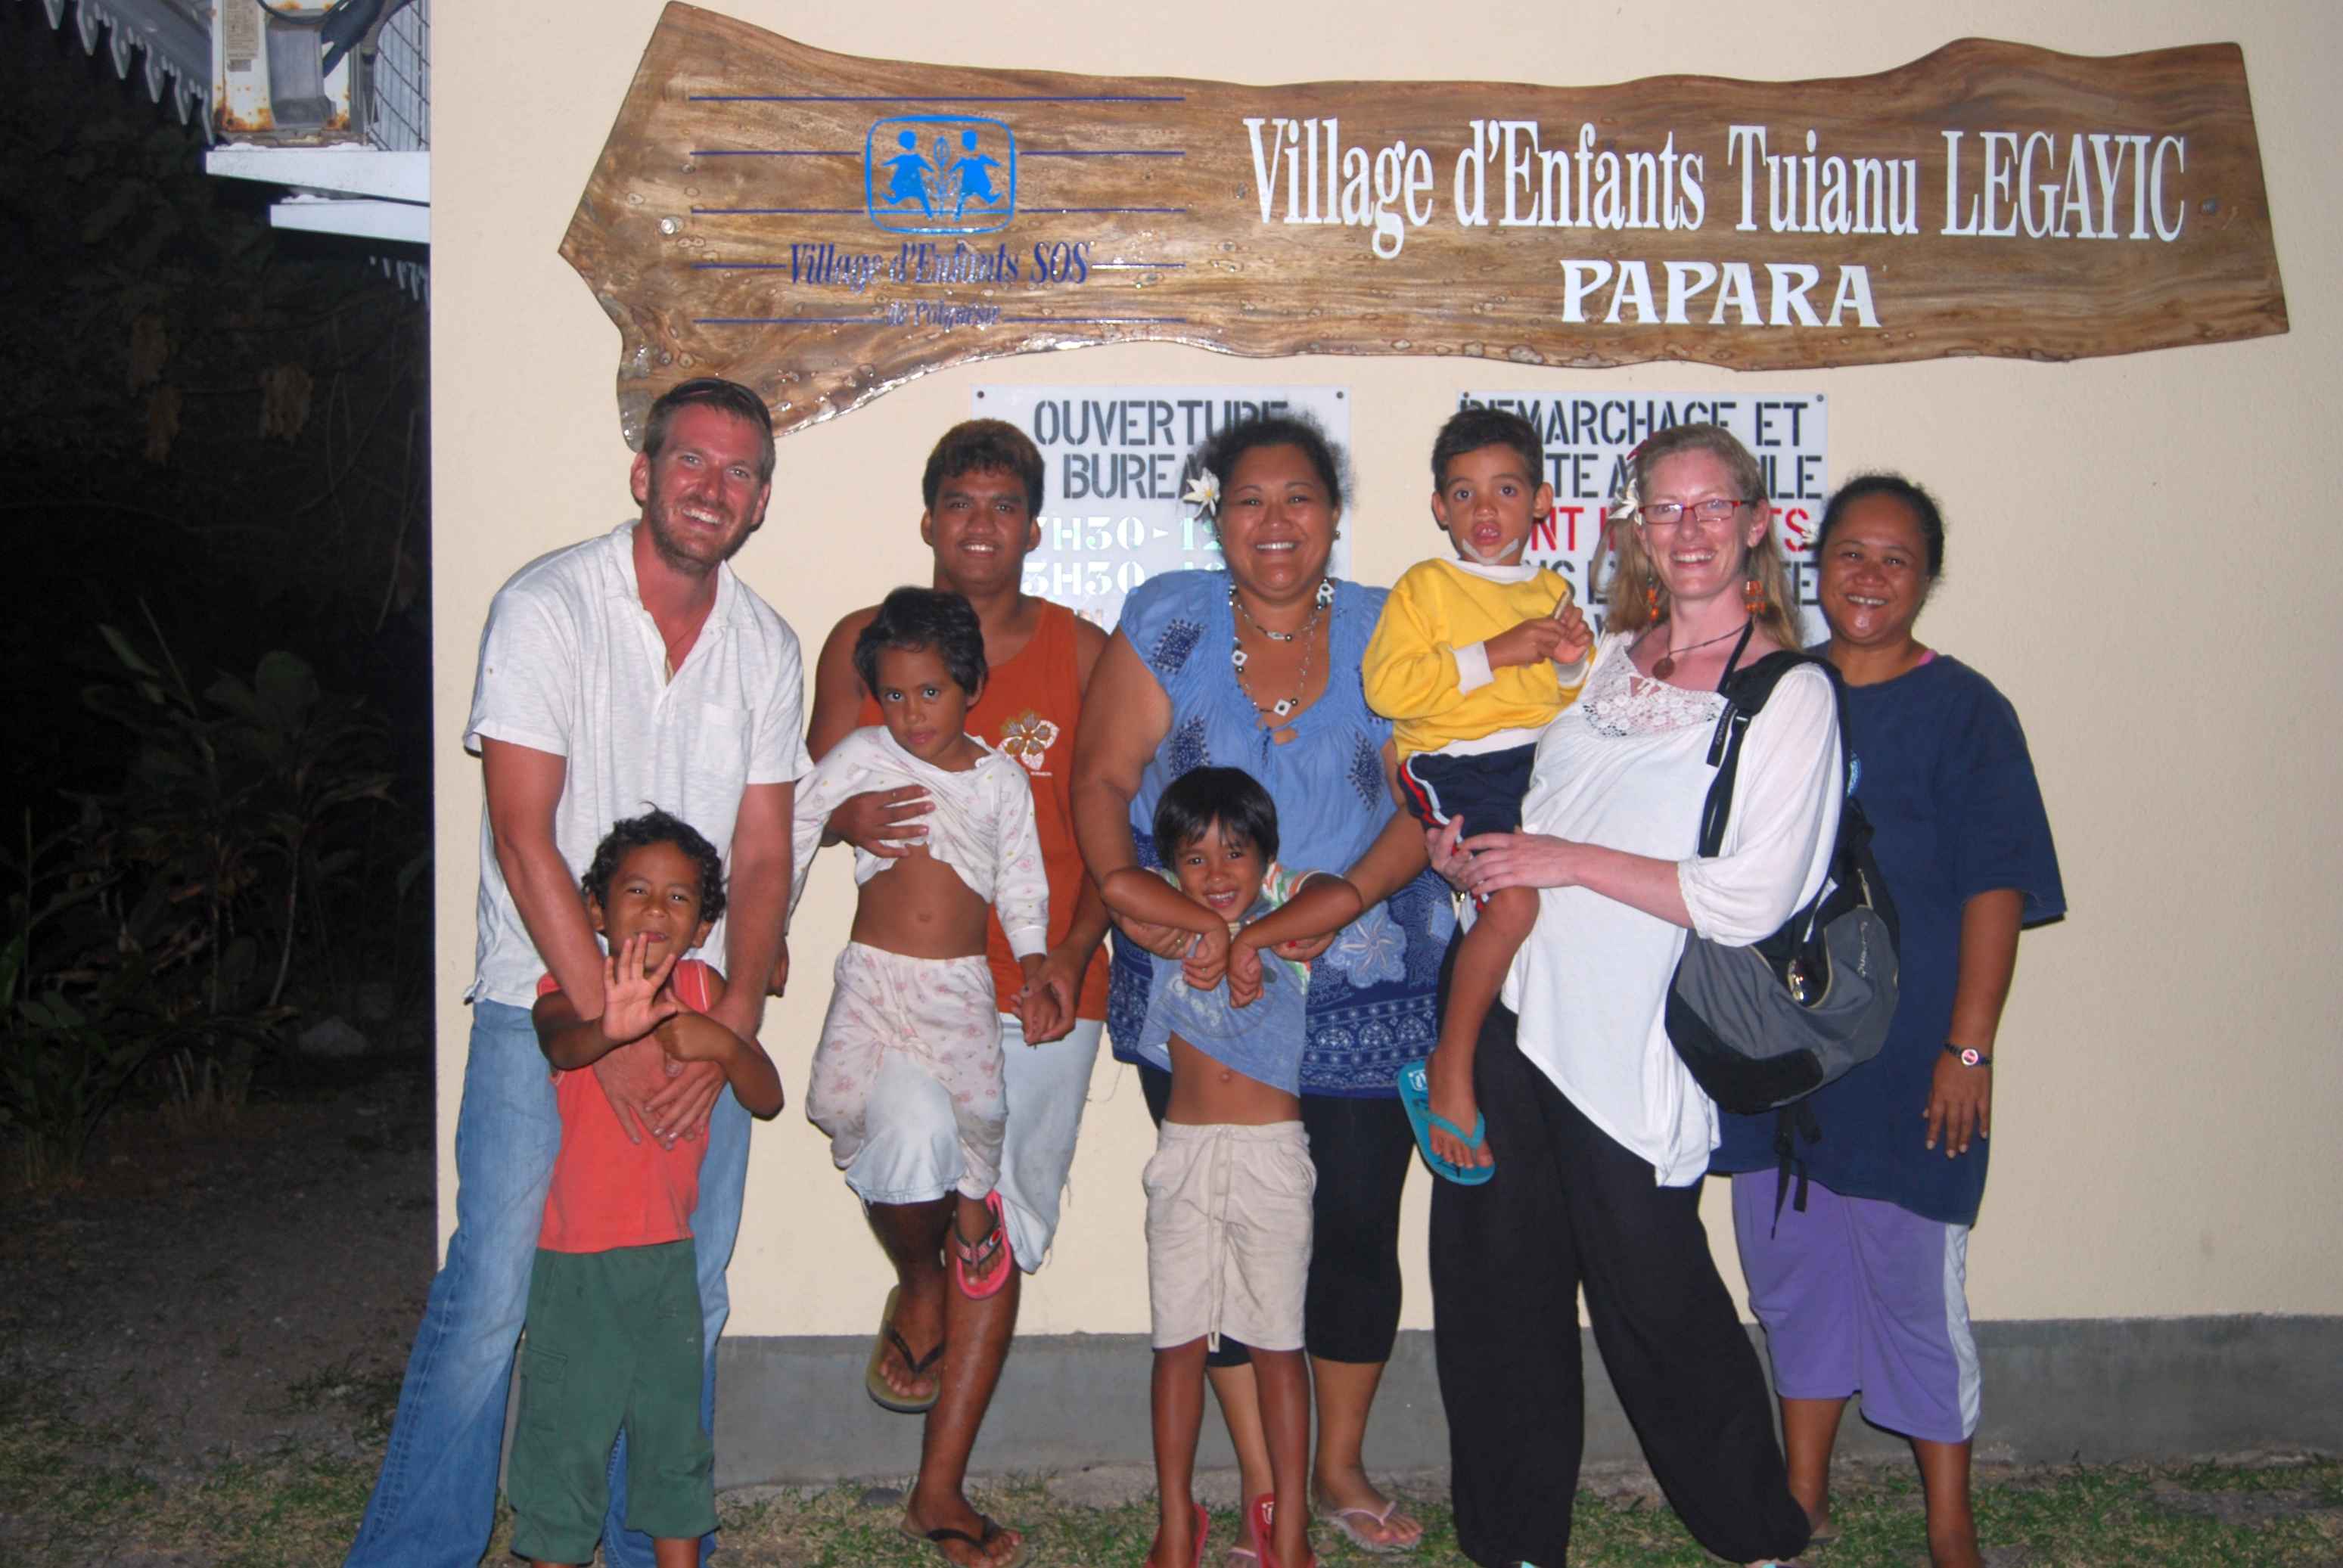 Sailing, Pacifc Passage, Lee Winters, Cruising, Singlehanded Sailing, SOS Children's Villages